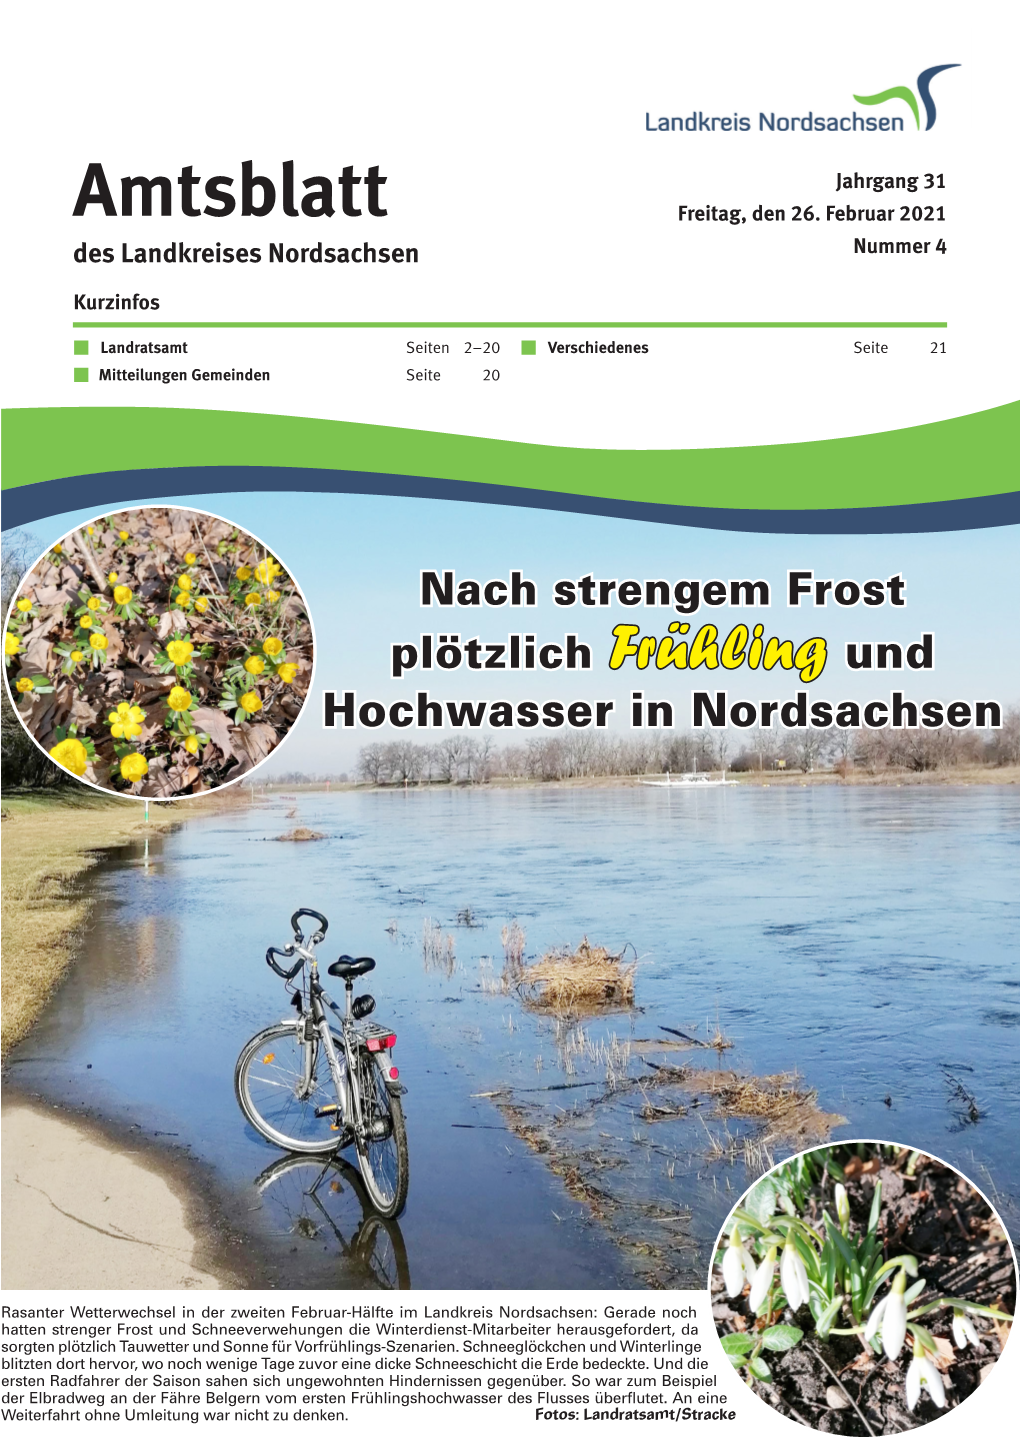 Amtsblatt Des Landkreises Nordsachsen, 26